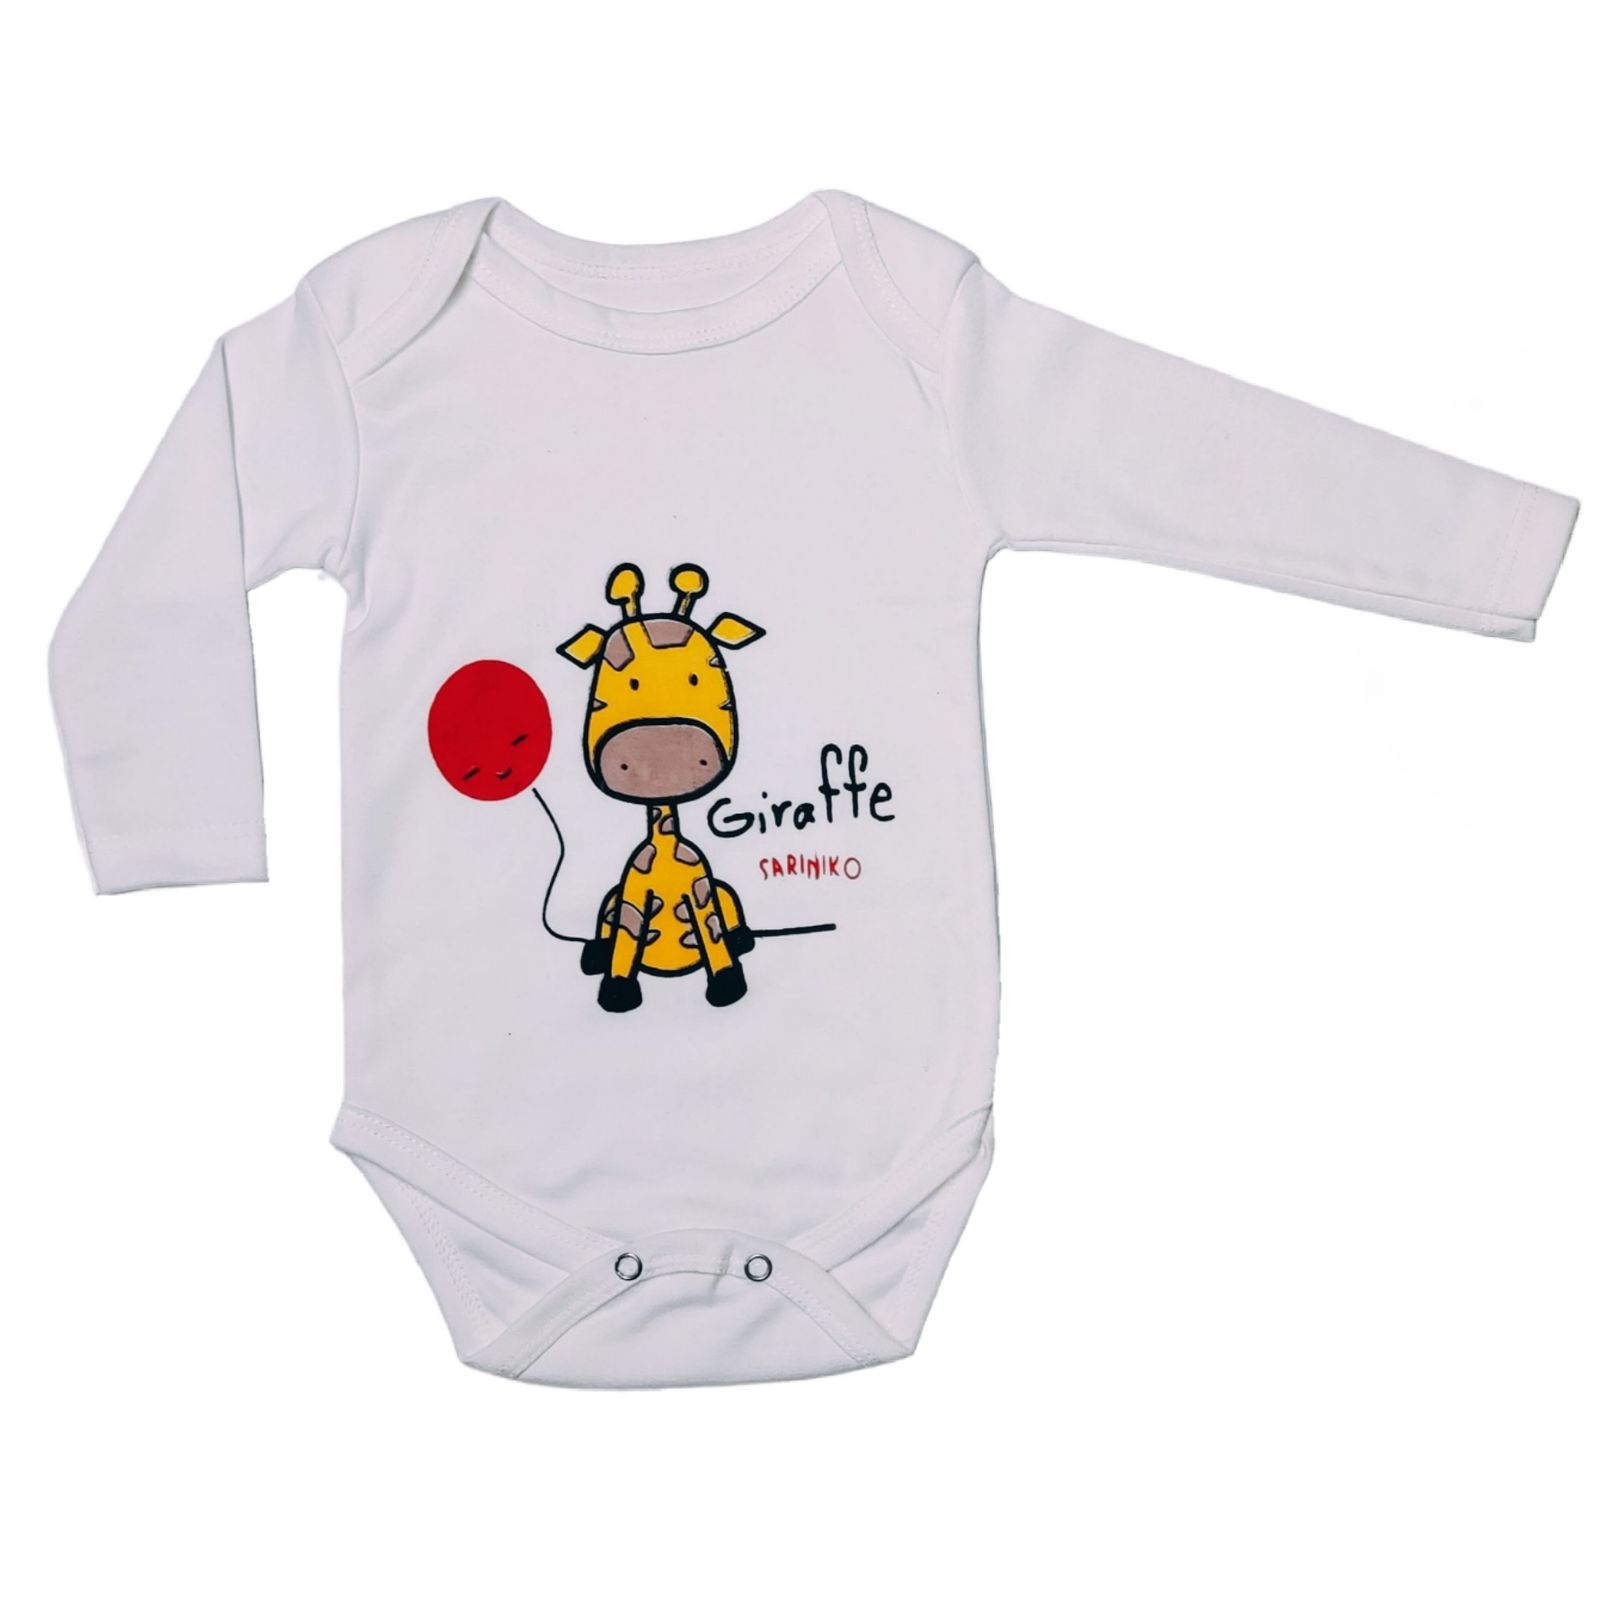 ست 3 تکه لباس نوزادی سرینیکو مدل Mini giraffe کد B210 -  - 6